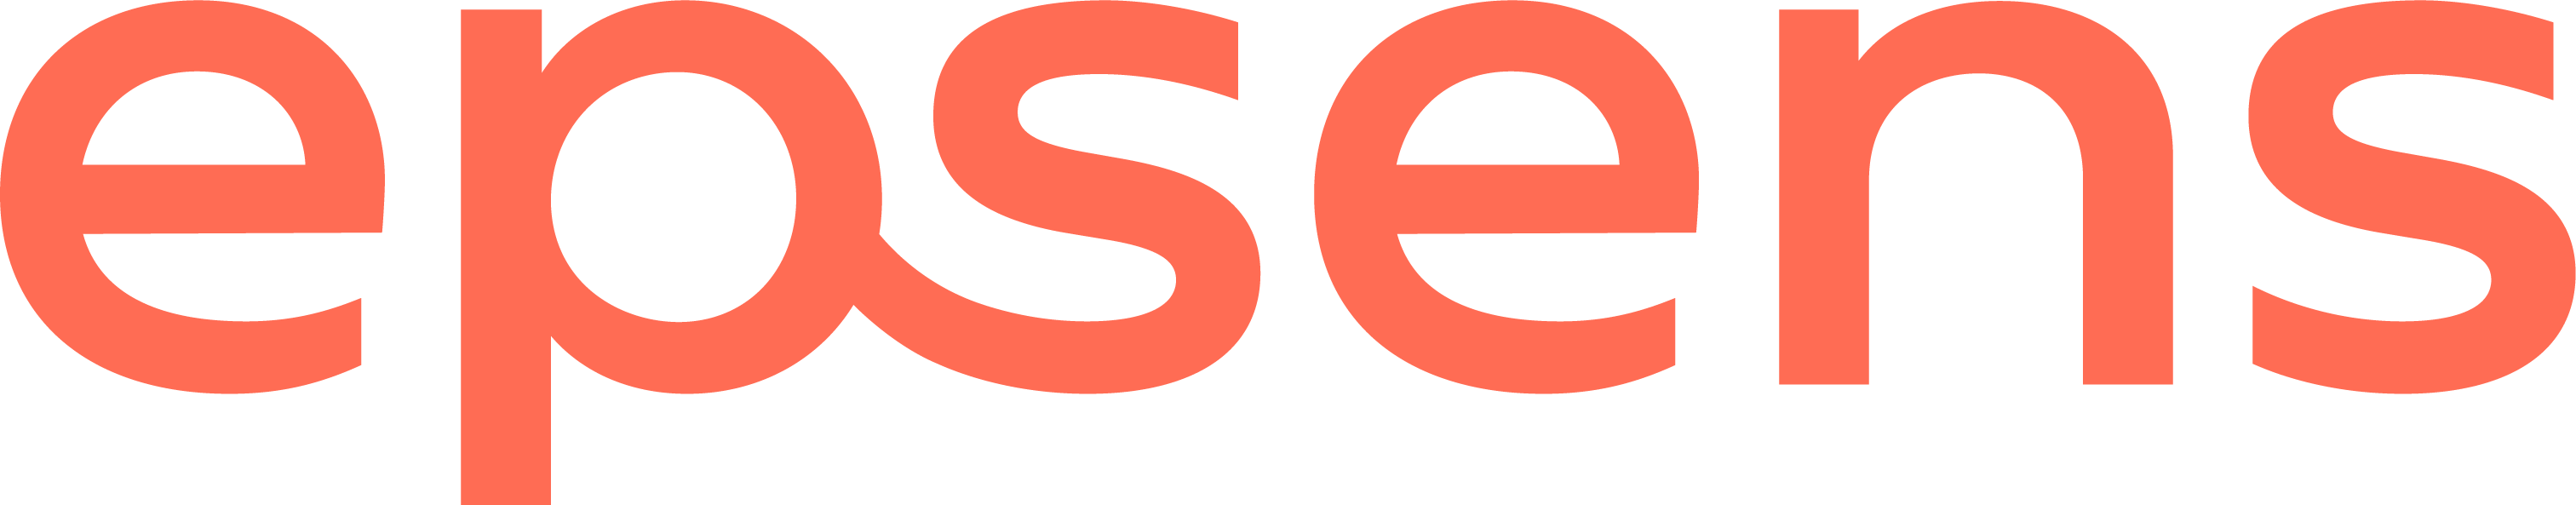 EPSENS_logo_orange_RVB